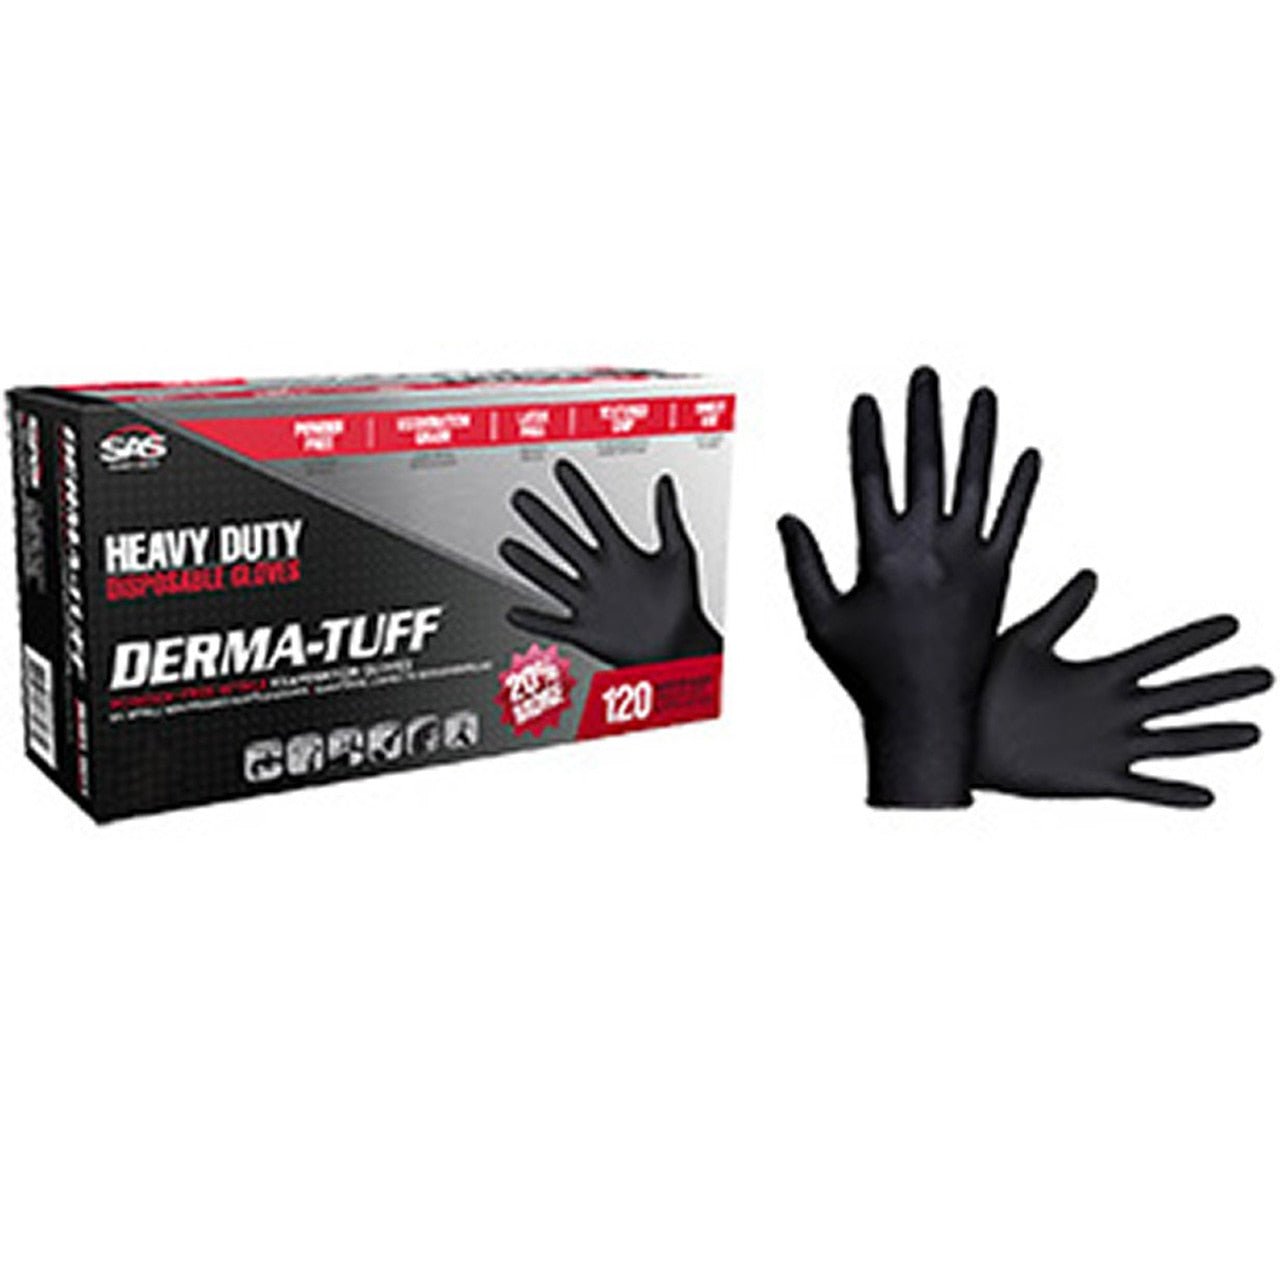 SAS Dermatuff Large Black Nitrile Gloves-6 mil (120ct Boxes)